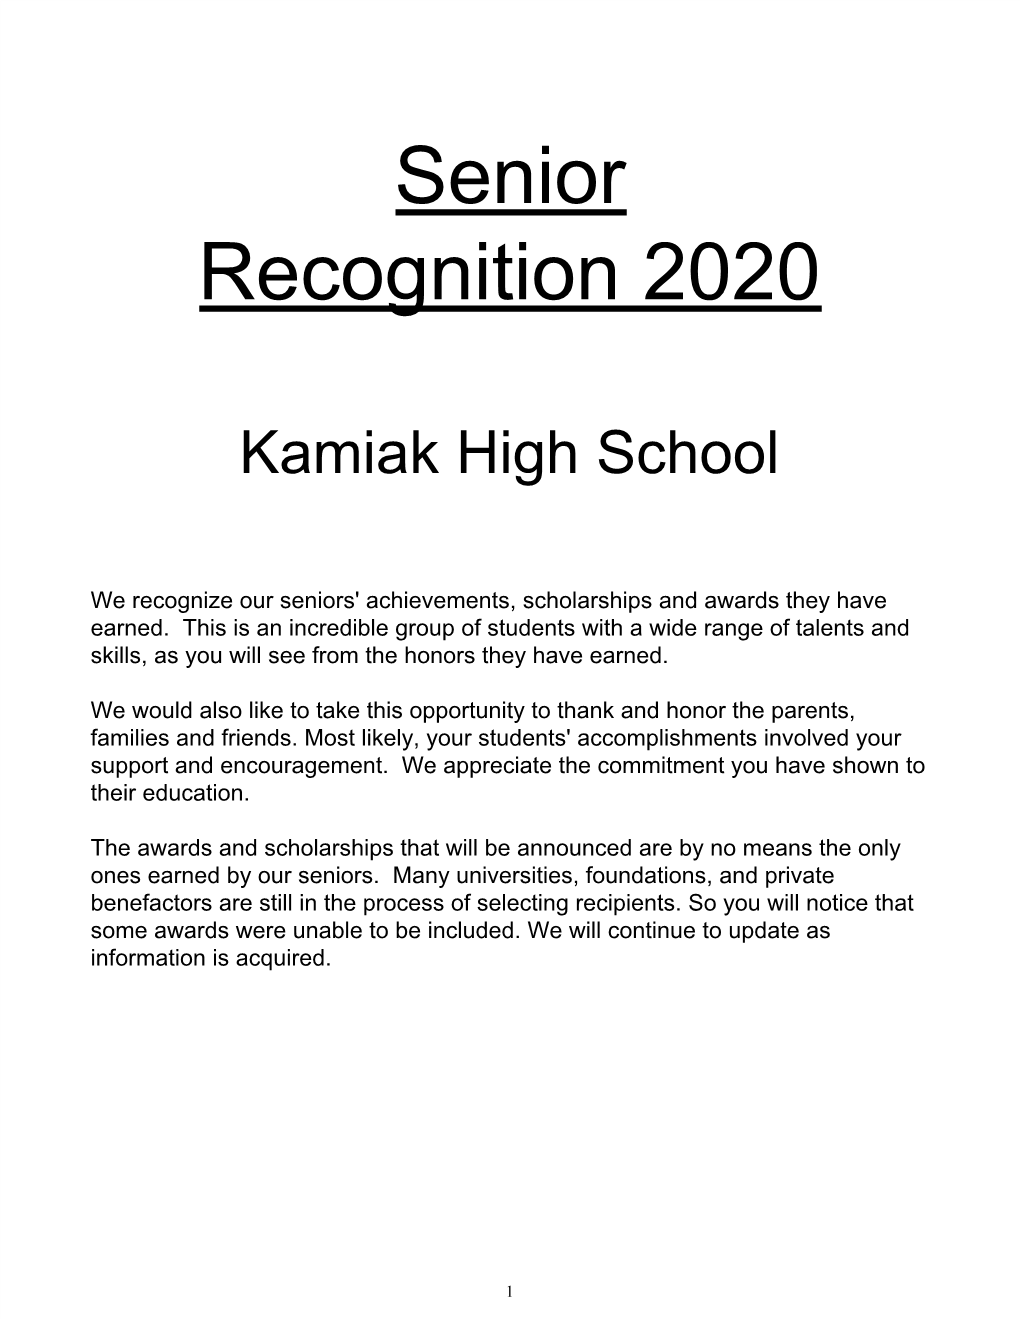 Senior Recognition 2020